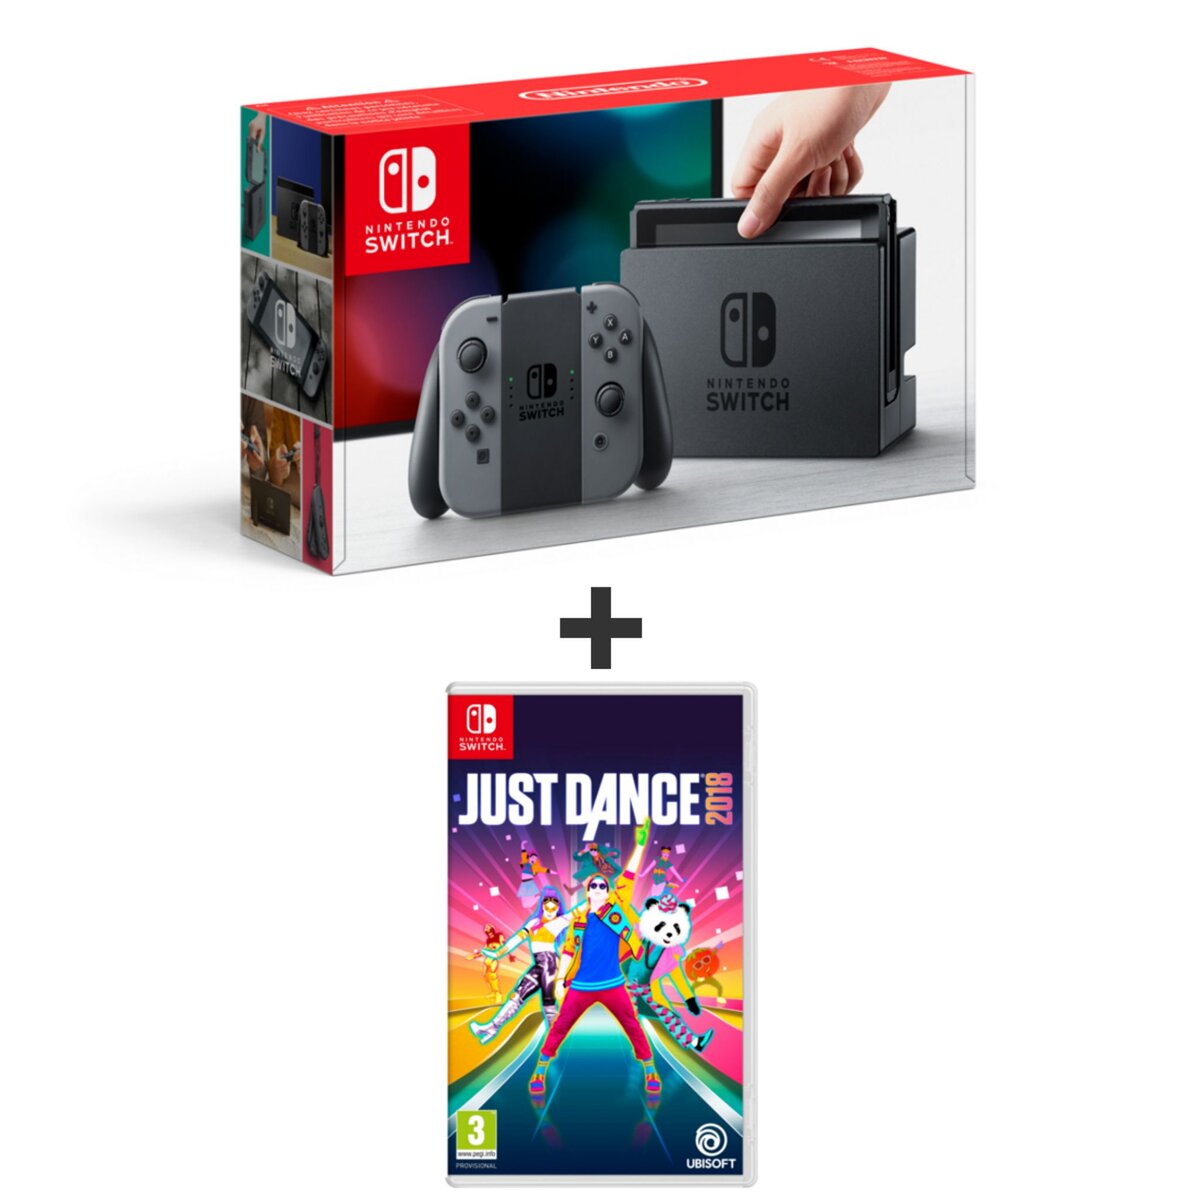 Console Nintendo Switch Joy-Con Grise + Just Dance 2018